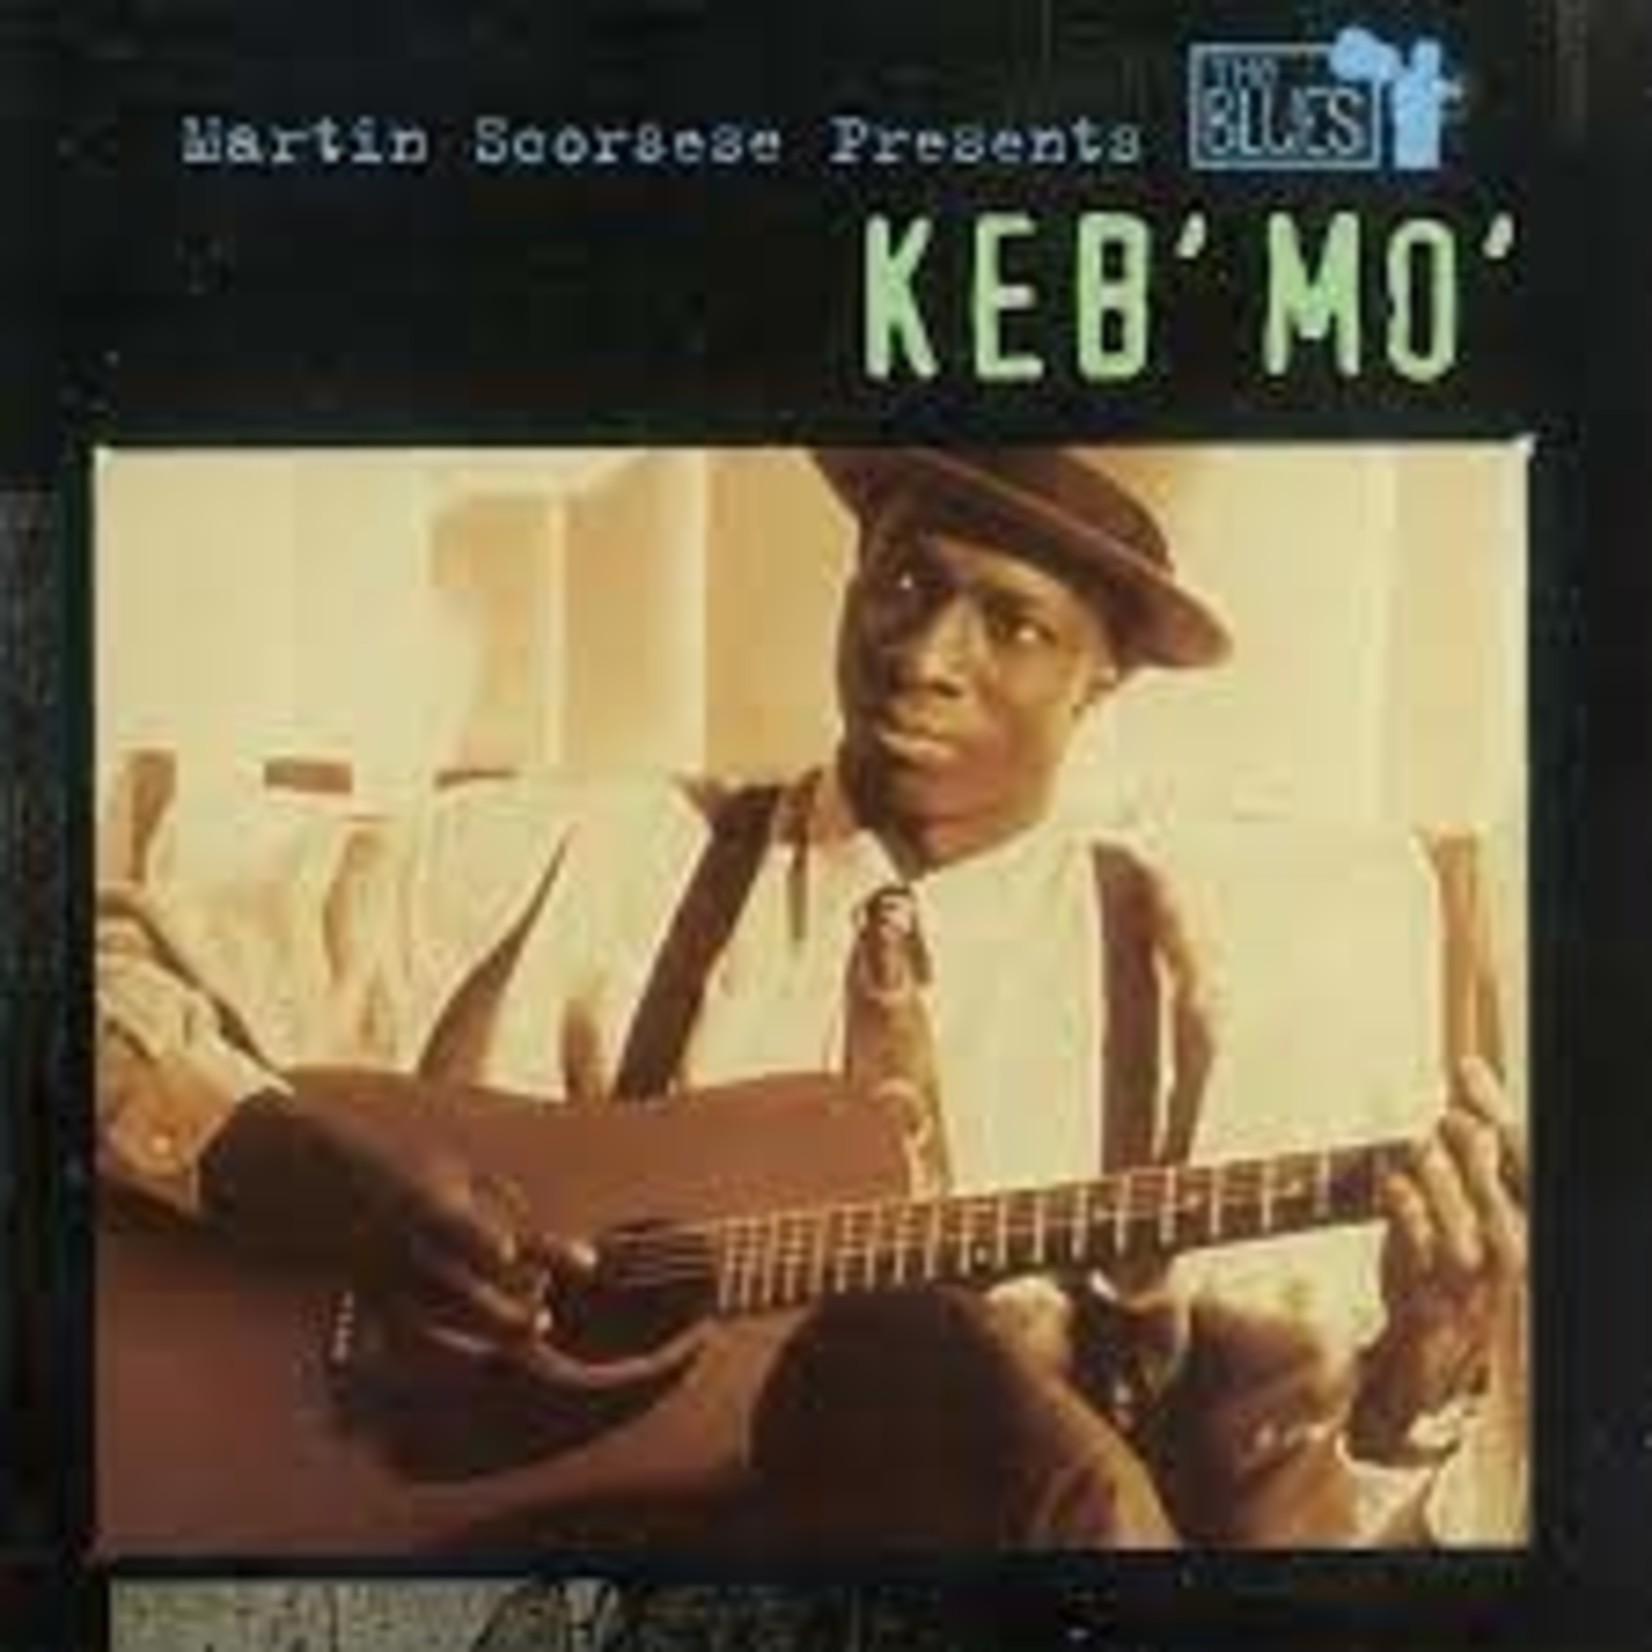 [New] Keb' Mo' - Martin Scorcese Presents The Blues (2LP, 180g, translucent blue vinyl)